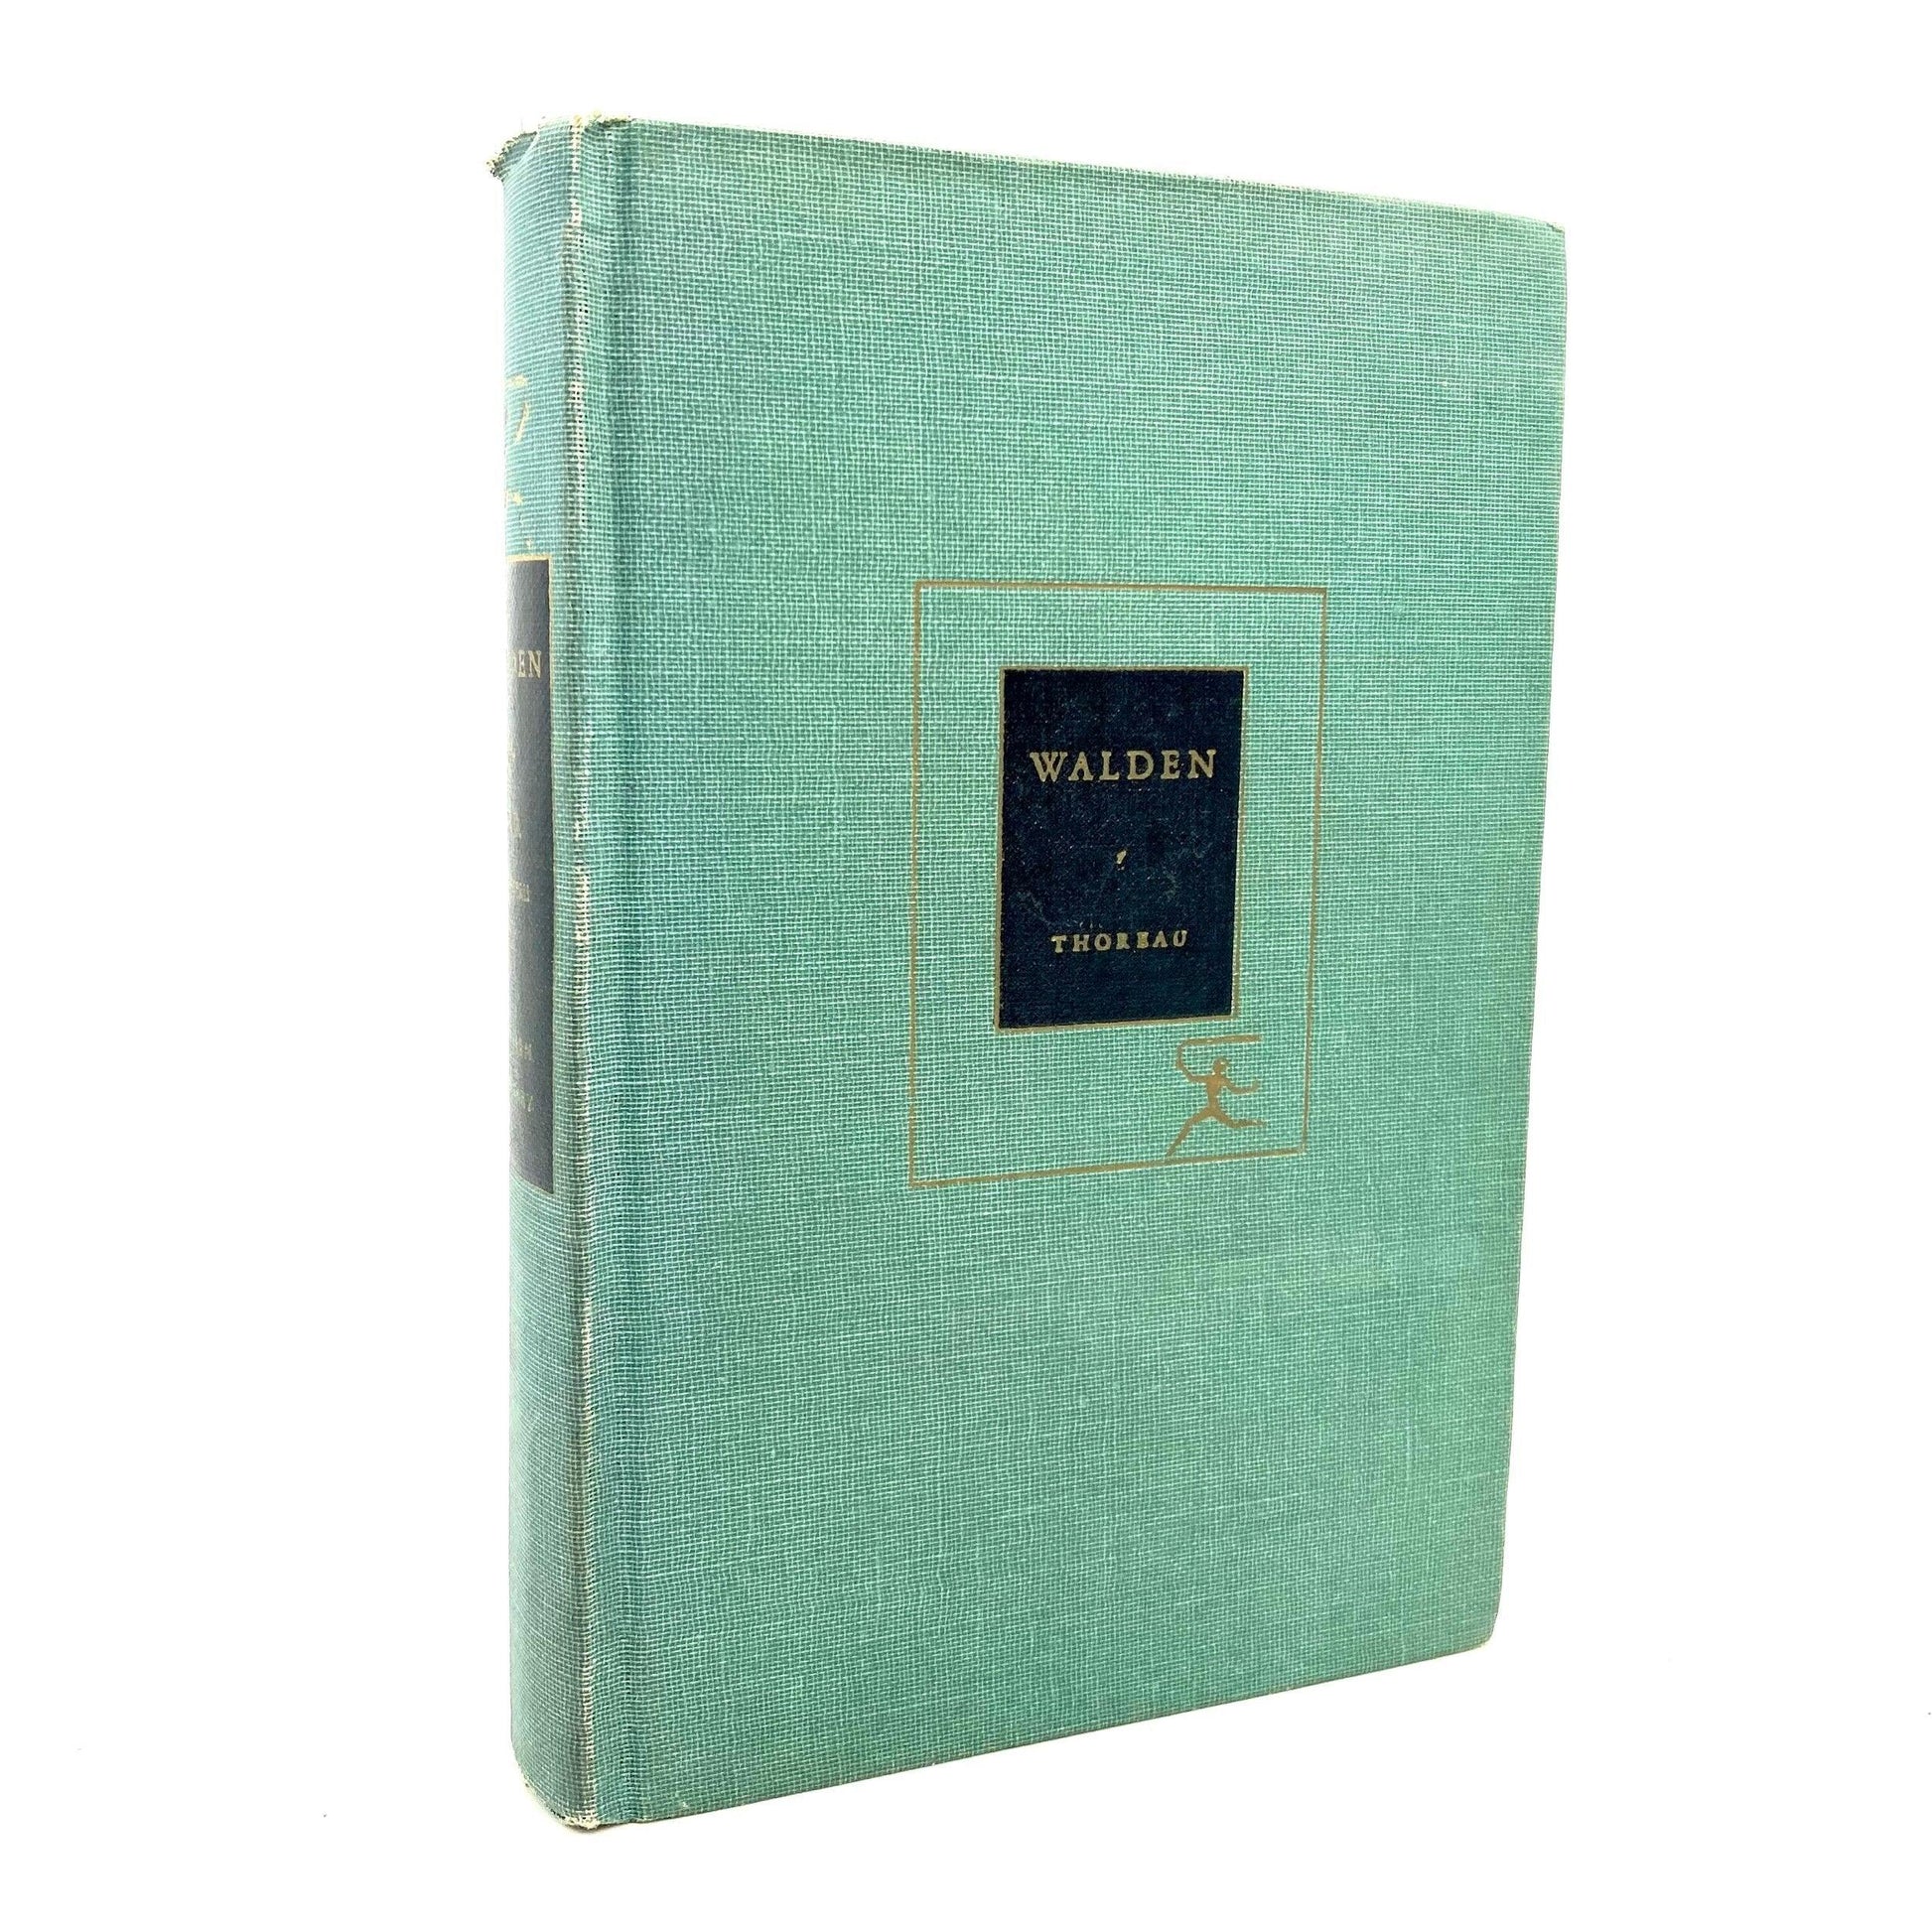 THOREAU, Henry David "Walden" [Modern Library, 1950] - Buzz Bookstore